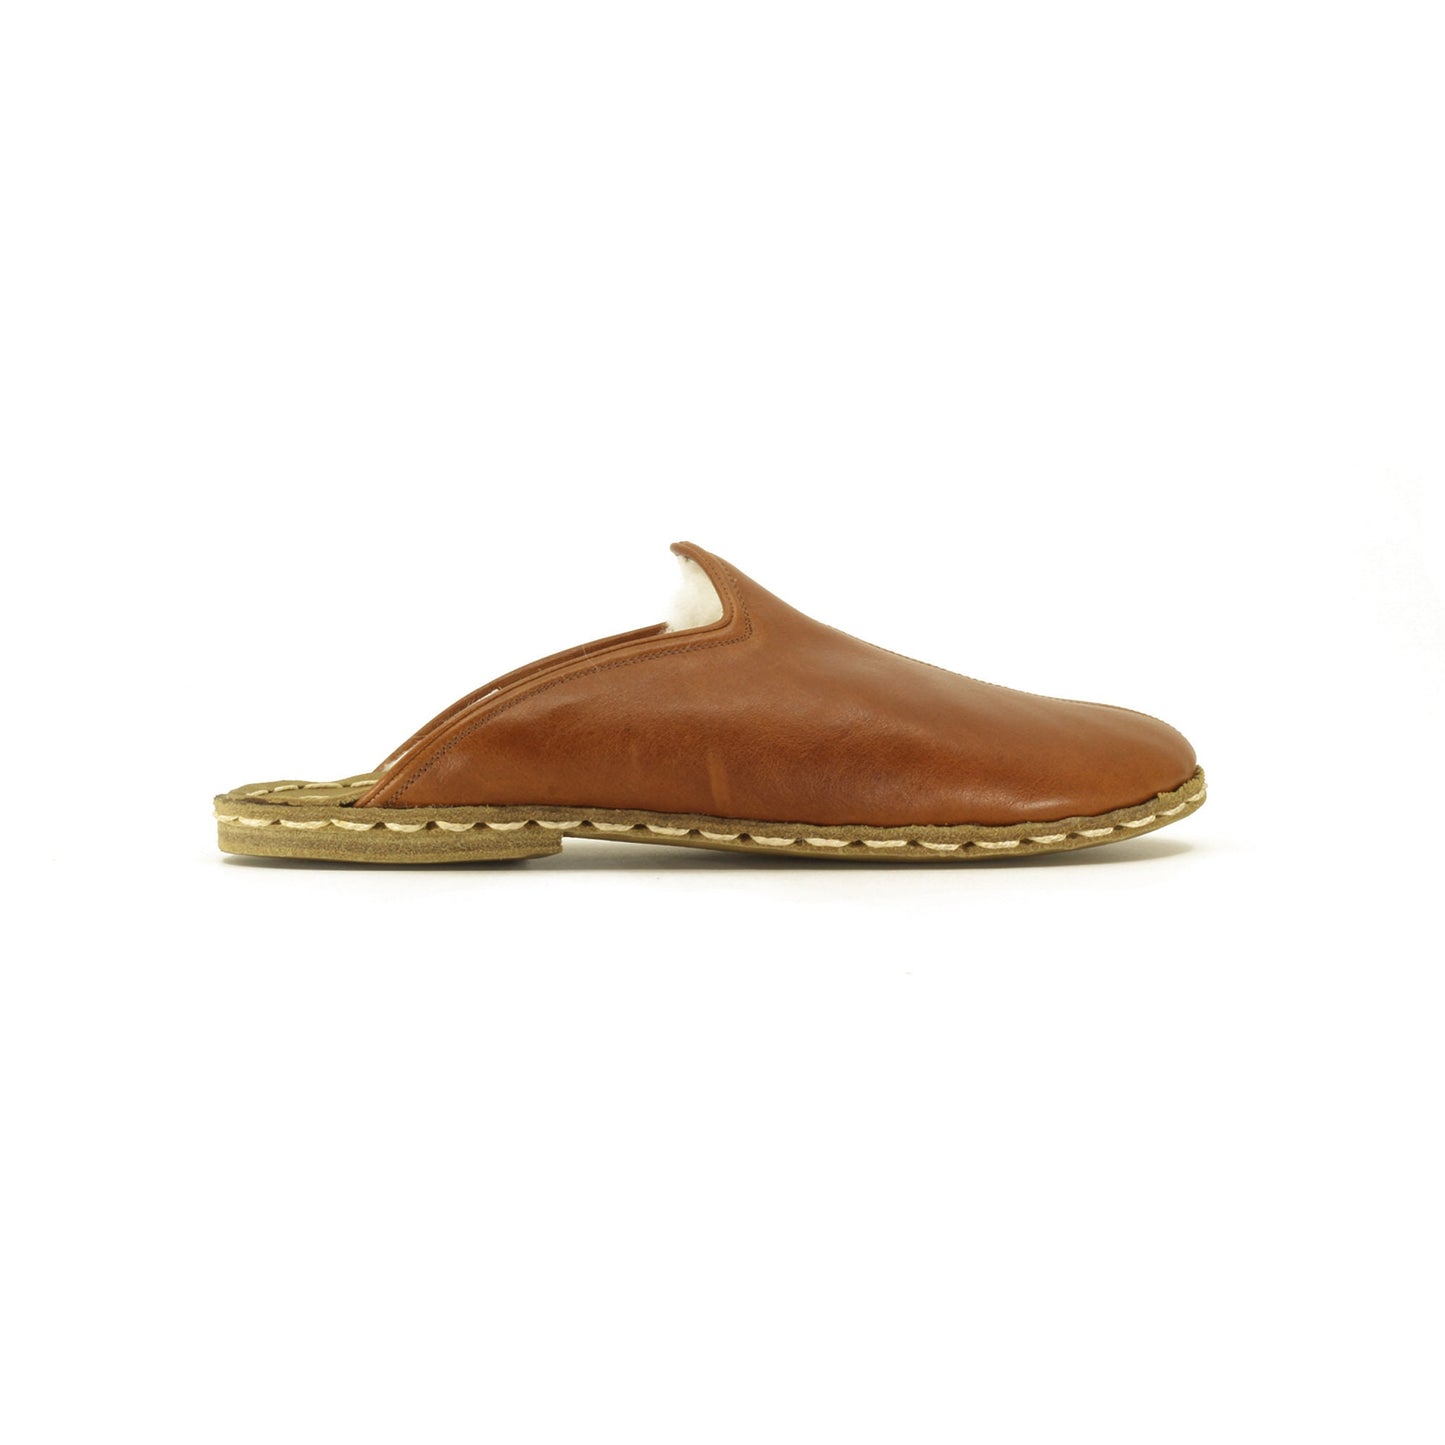 Sheepskin slippers - Winter Slippers - Barefoot Slipper - Close Toed Slippers - Antique Brown Leather - Copper Rivet - For Women